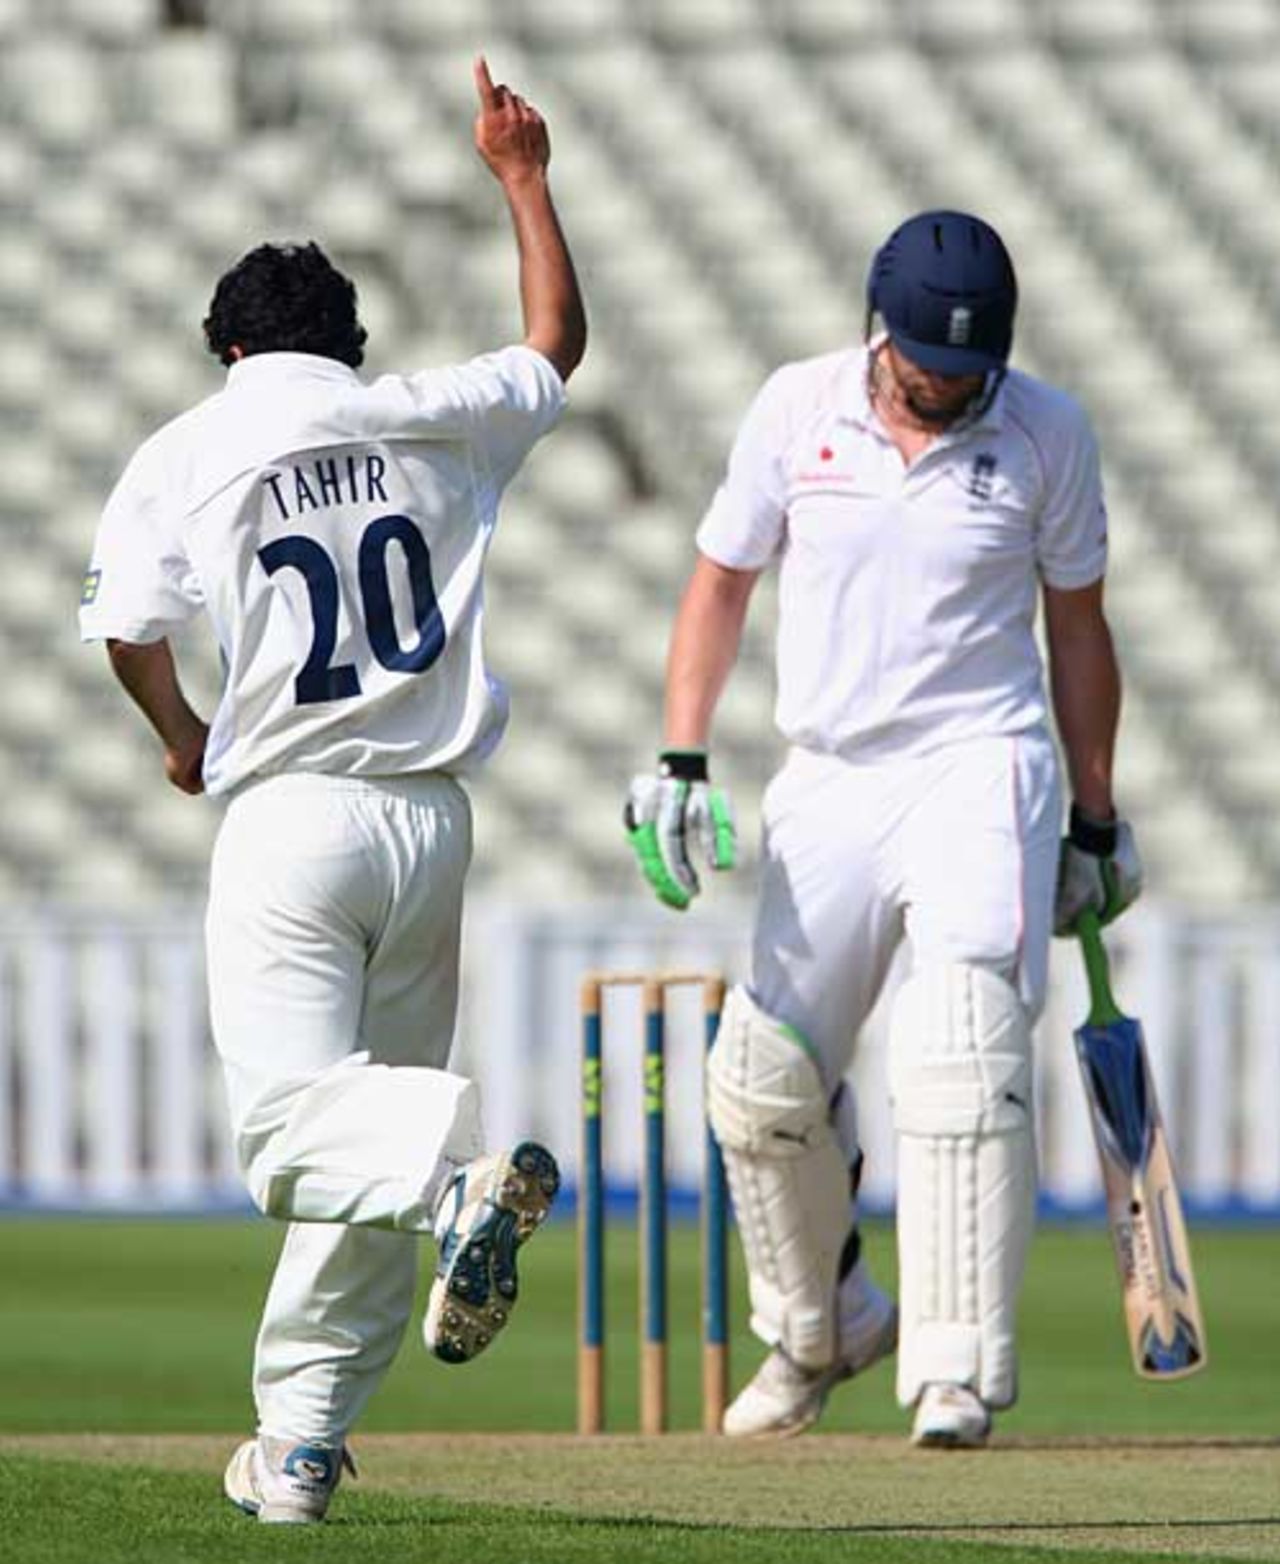 Andrew Flintoff's innings is ended by Naqaash Tahir, England XI v Warwickshire, Edgbaston, July 1, 2009